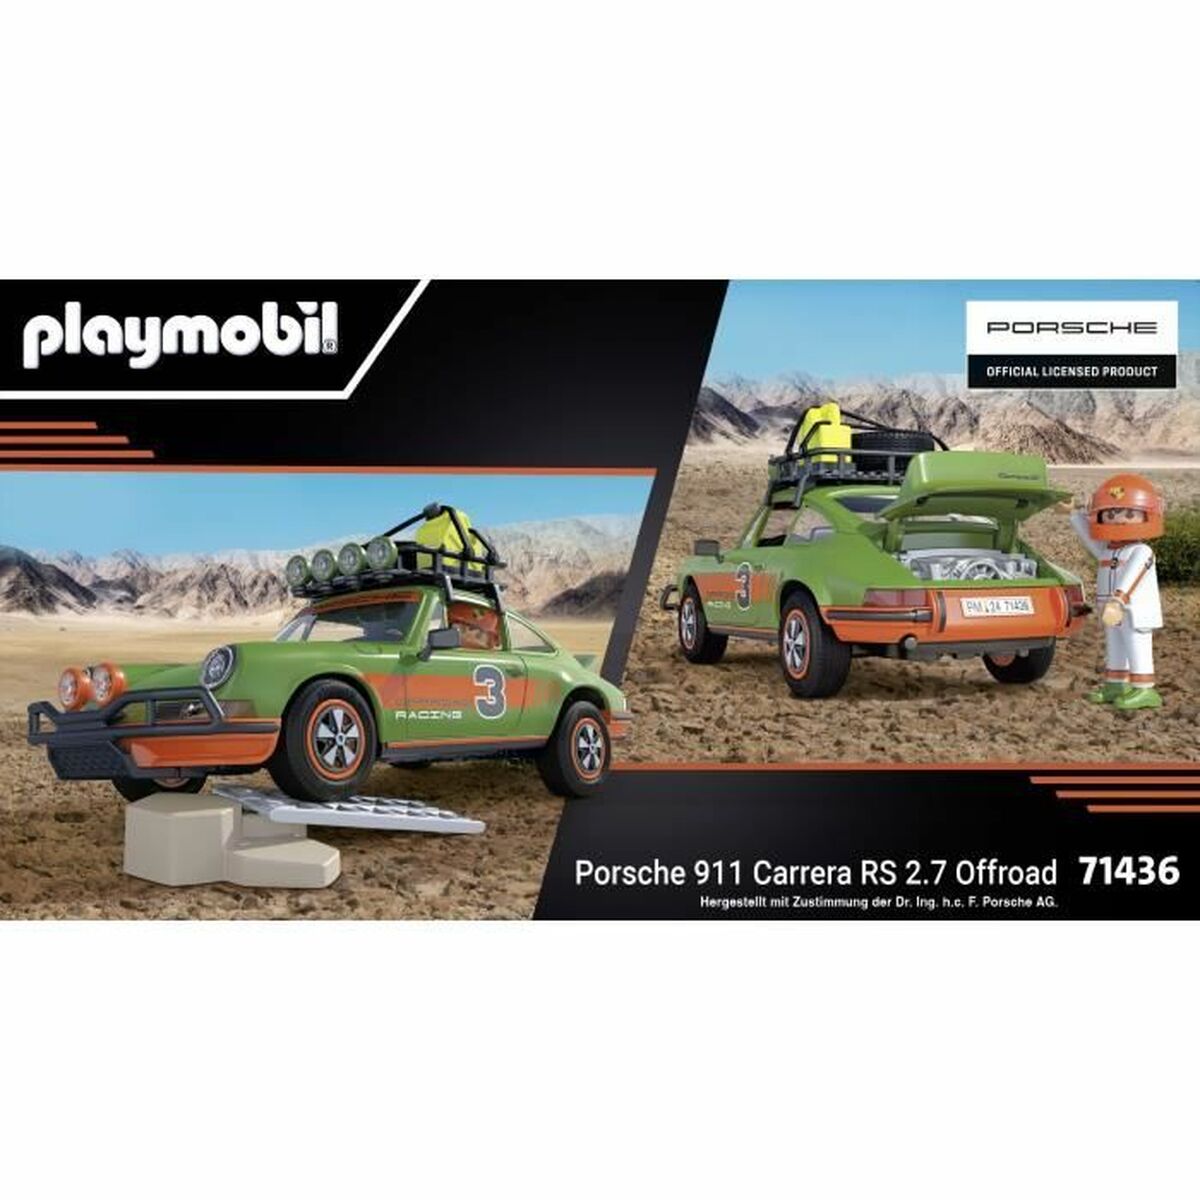 Playset Playmobil 47 Pièces - Playmobil - Jardin D'Eyden - jardindeyden.fr